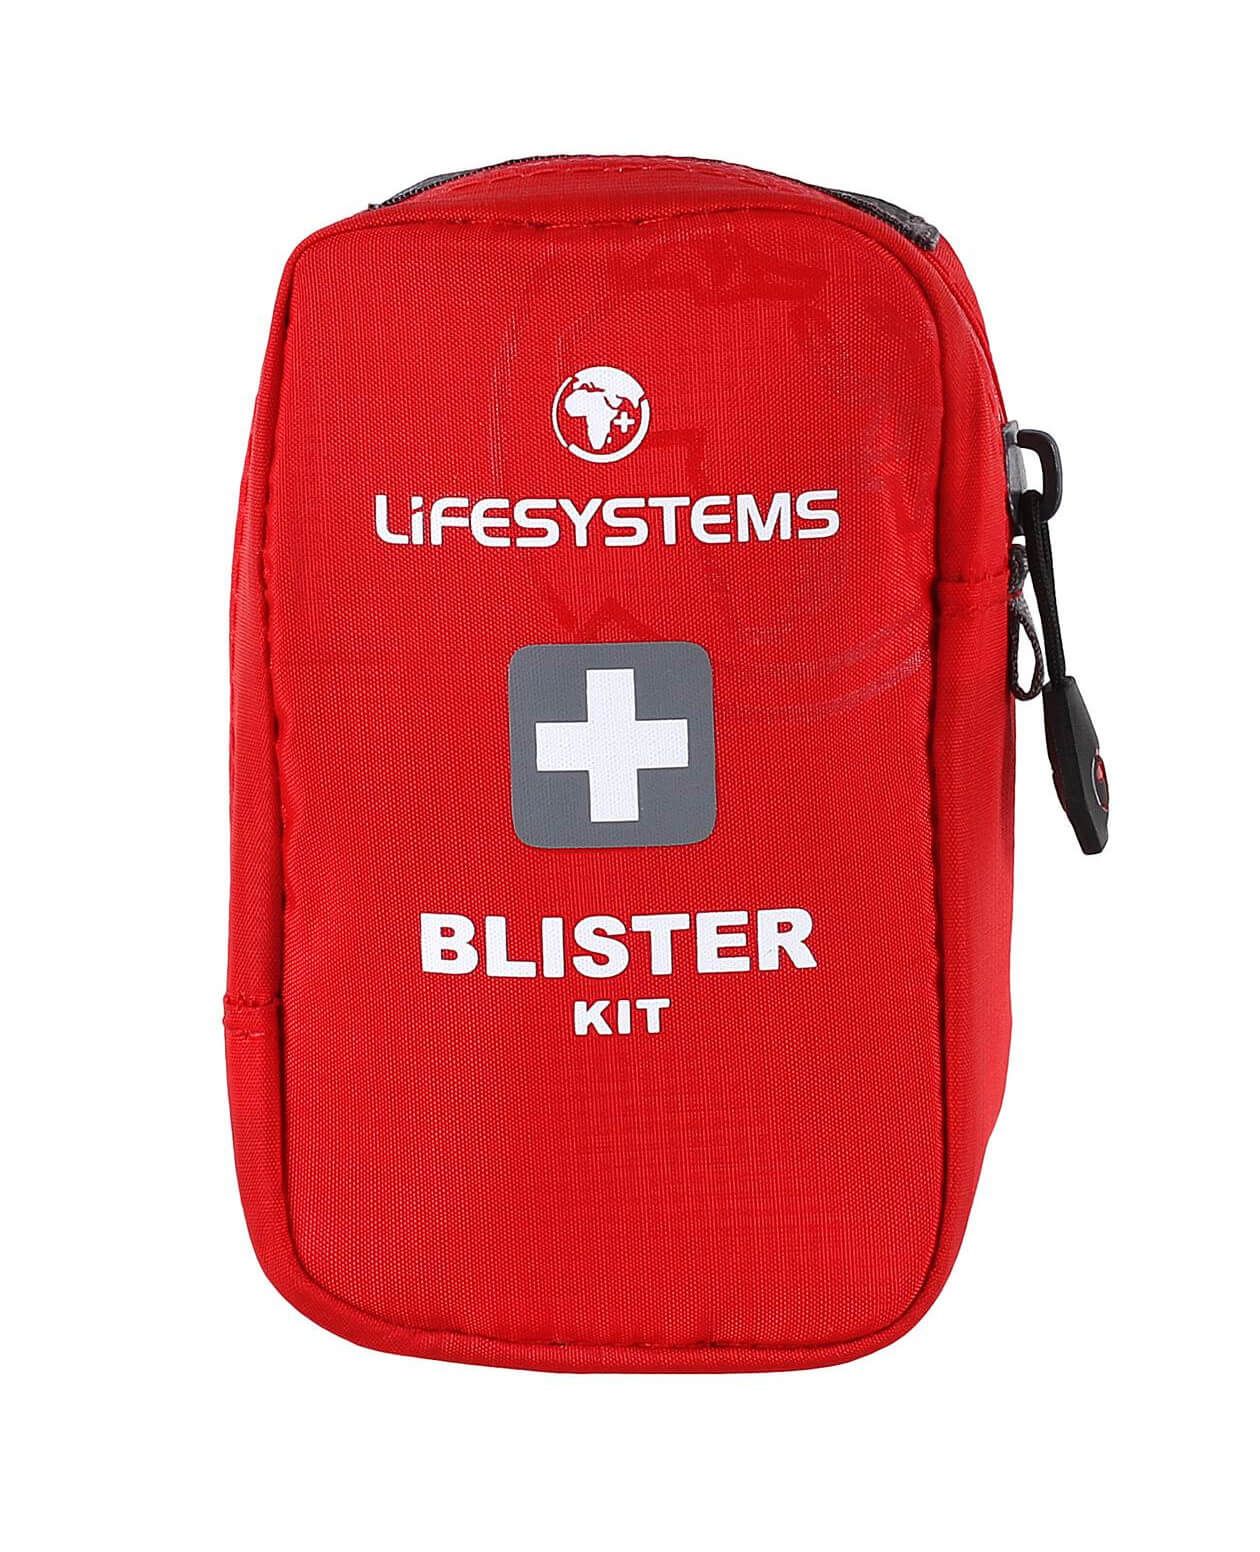 travel-first-aid-blister-kit-lifesystems-1_bigjpg